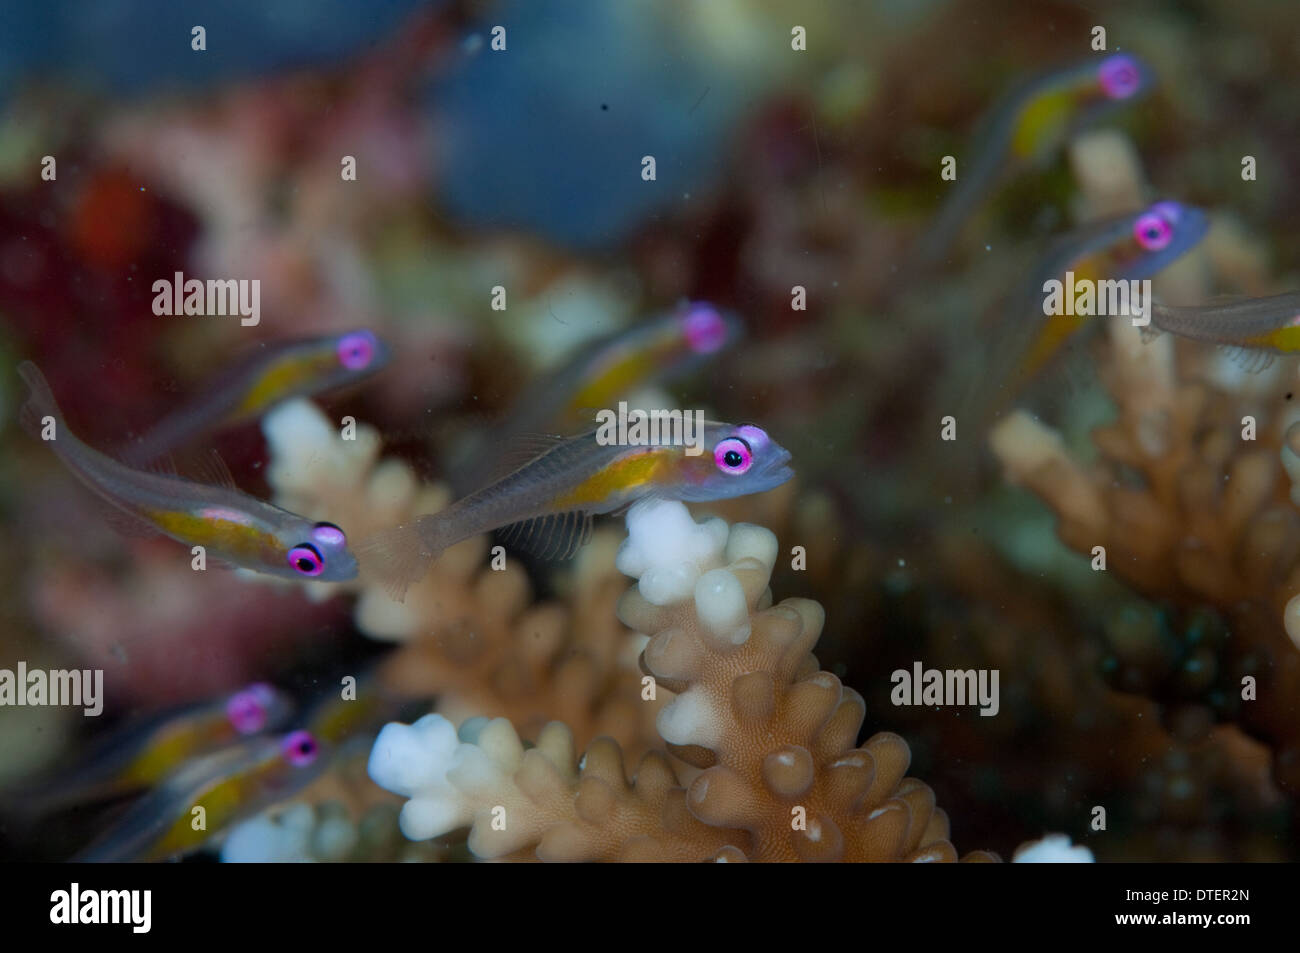 Several Pinkeye Goby, Bryaninops natans, on Hard Coral, Acropora sp., The Maldives Stock Photo